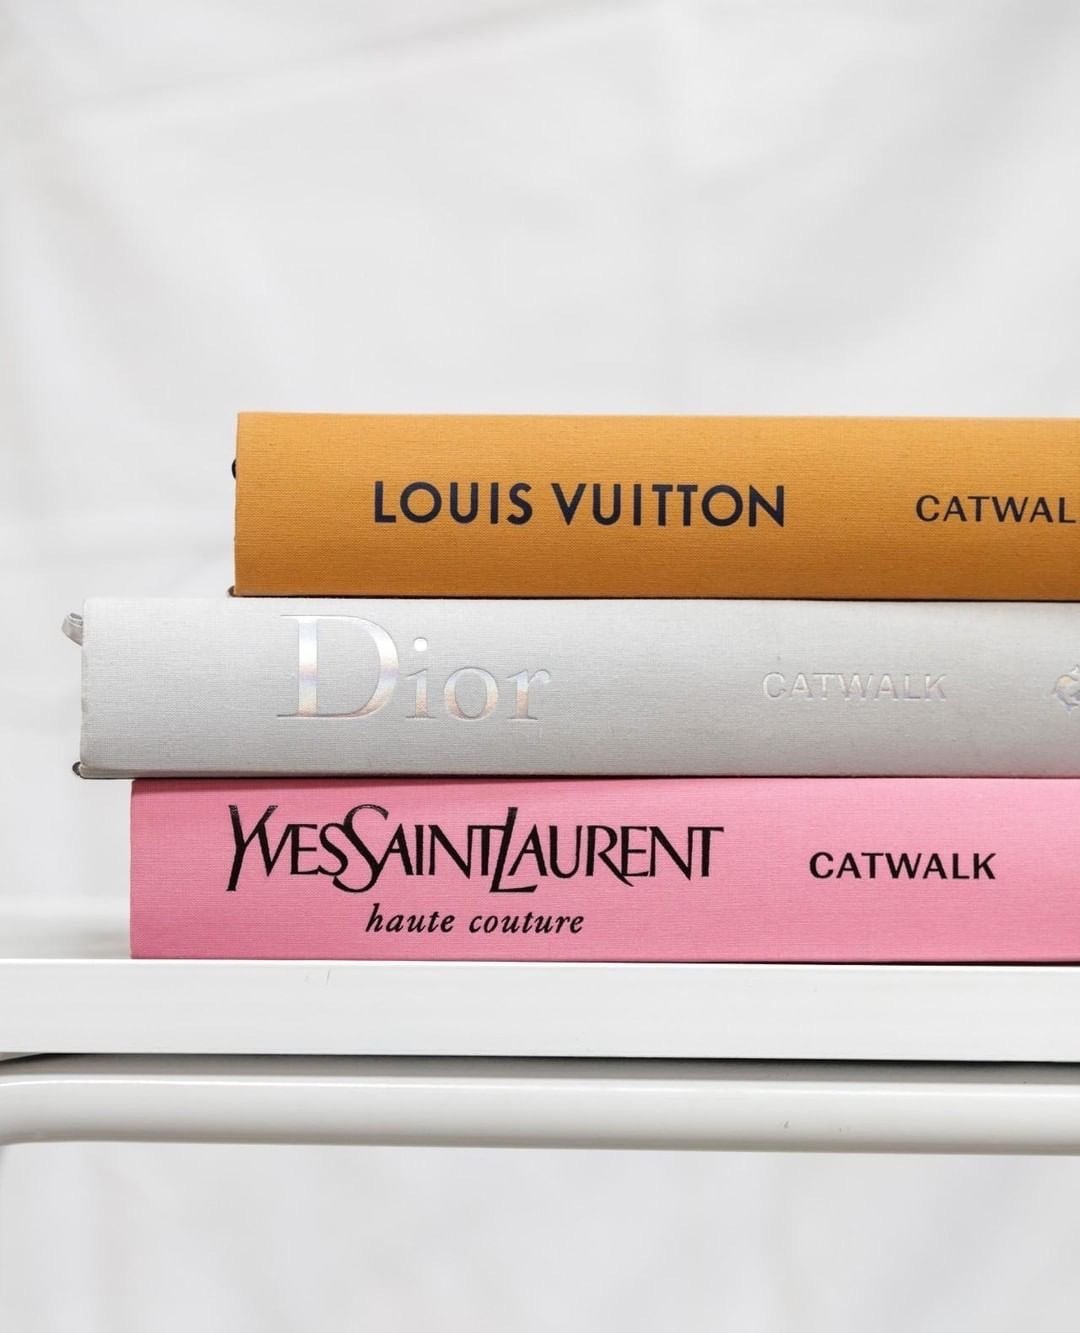 Yves Saint Laurent Catwalk, Chanel Catwalk and Prada Catwalk Books